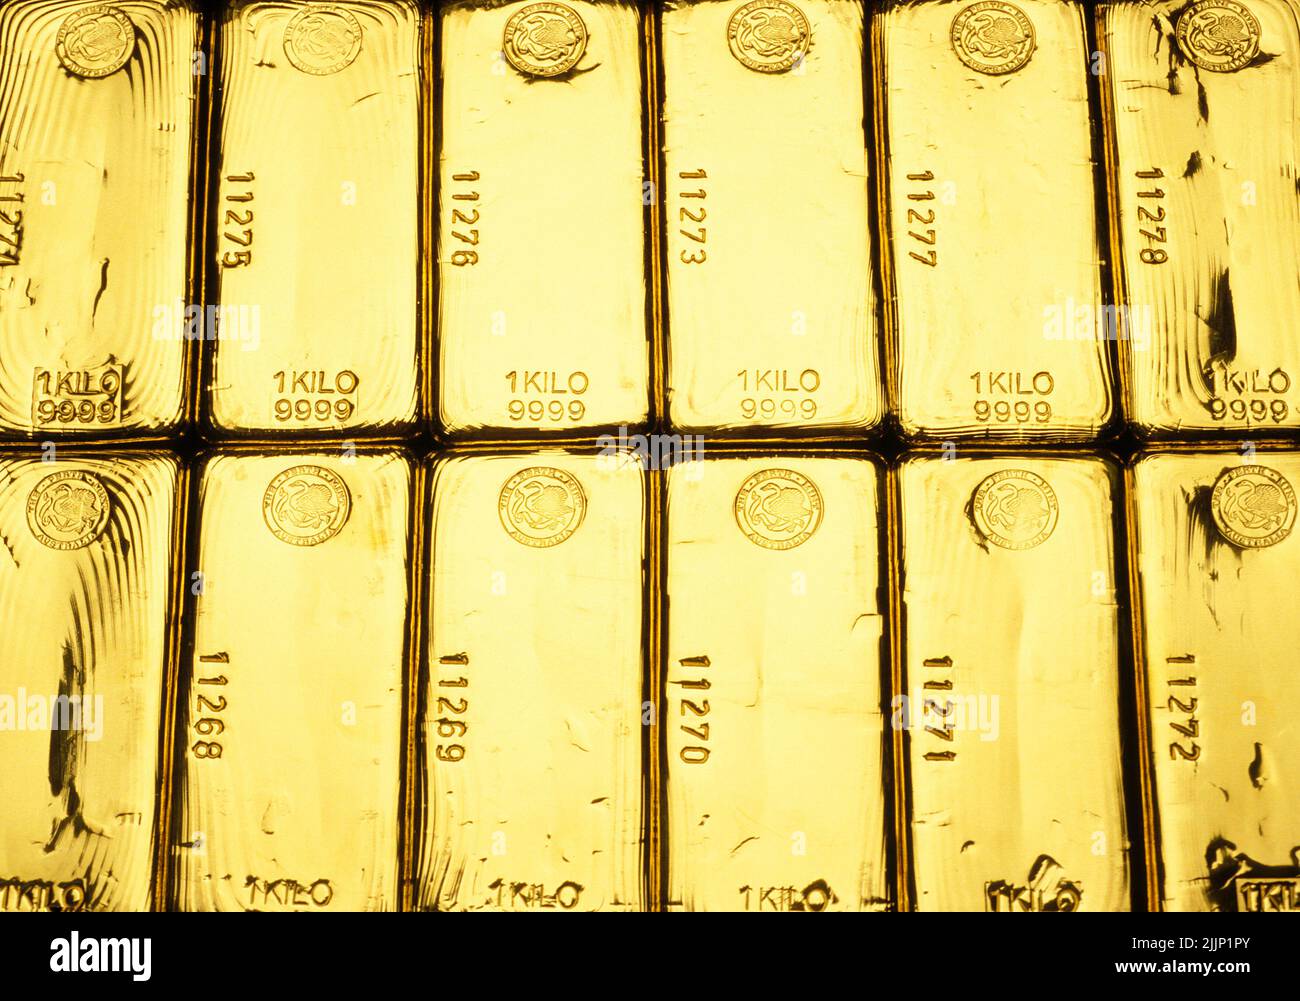 Perth, Australia - 16 de abril de 2007: Barras de oro puro de un kilo de la Casa de Moneda de Perth en Australia. Foto de stock